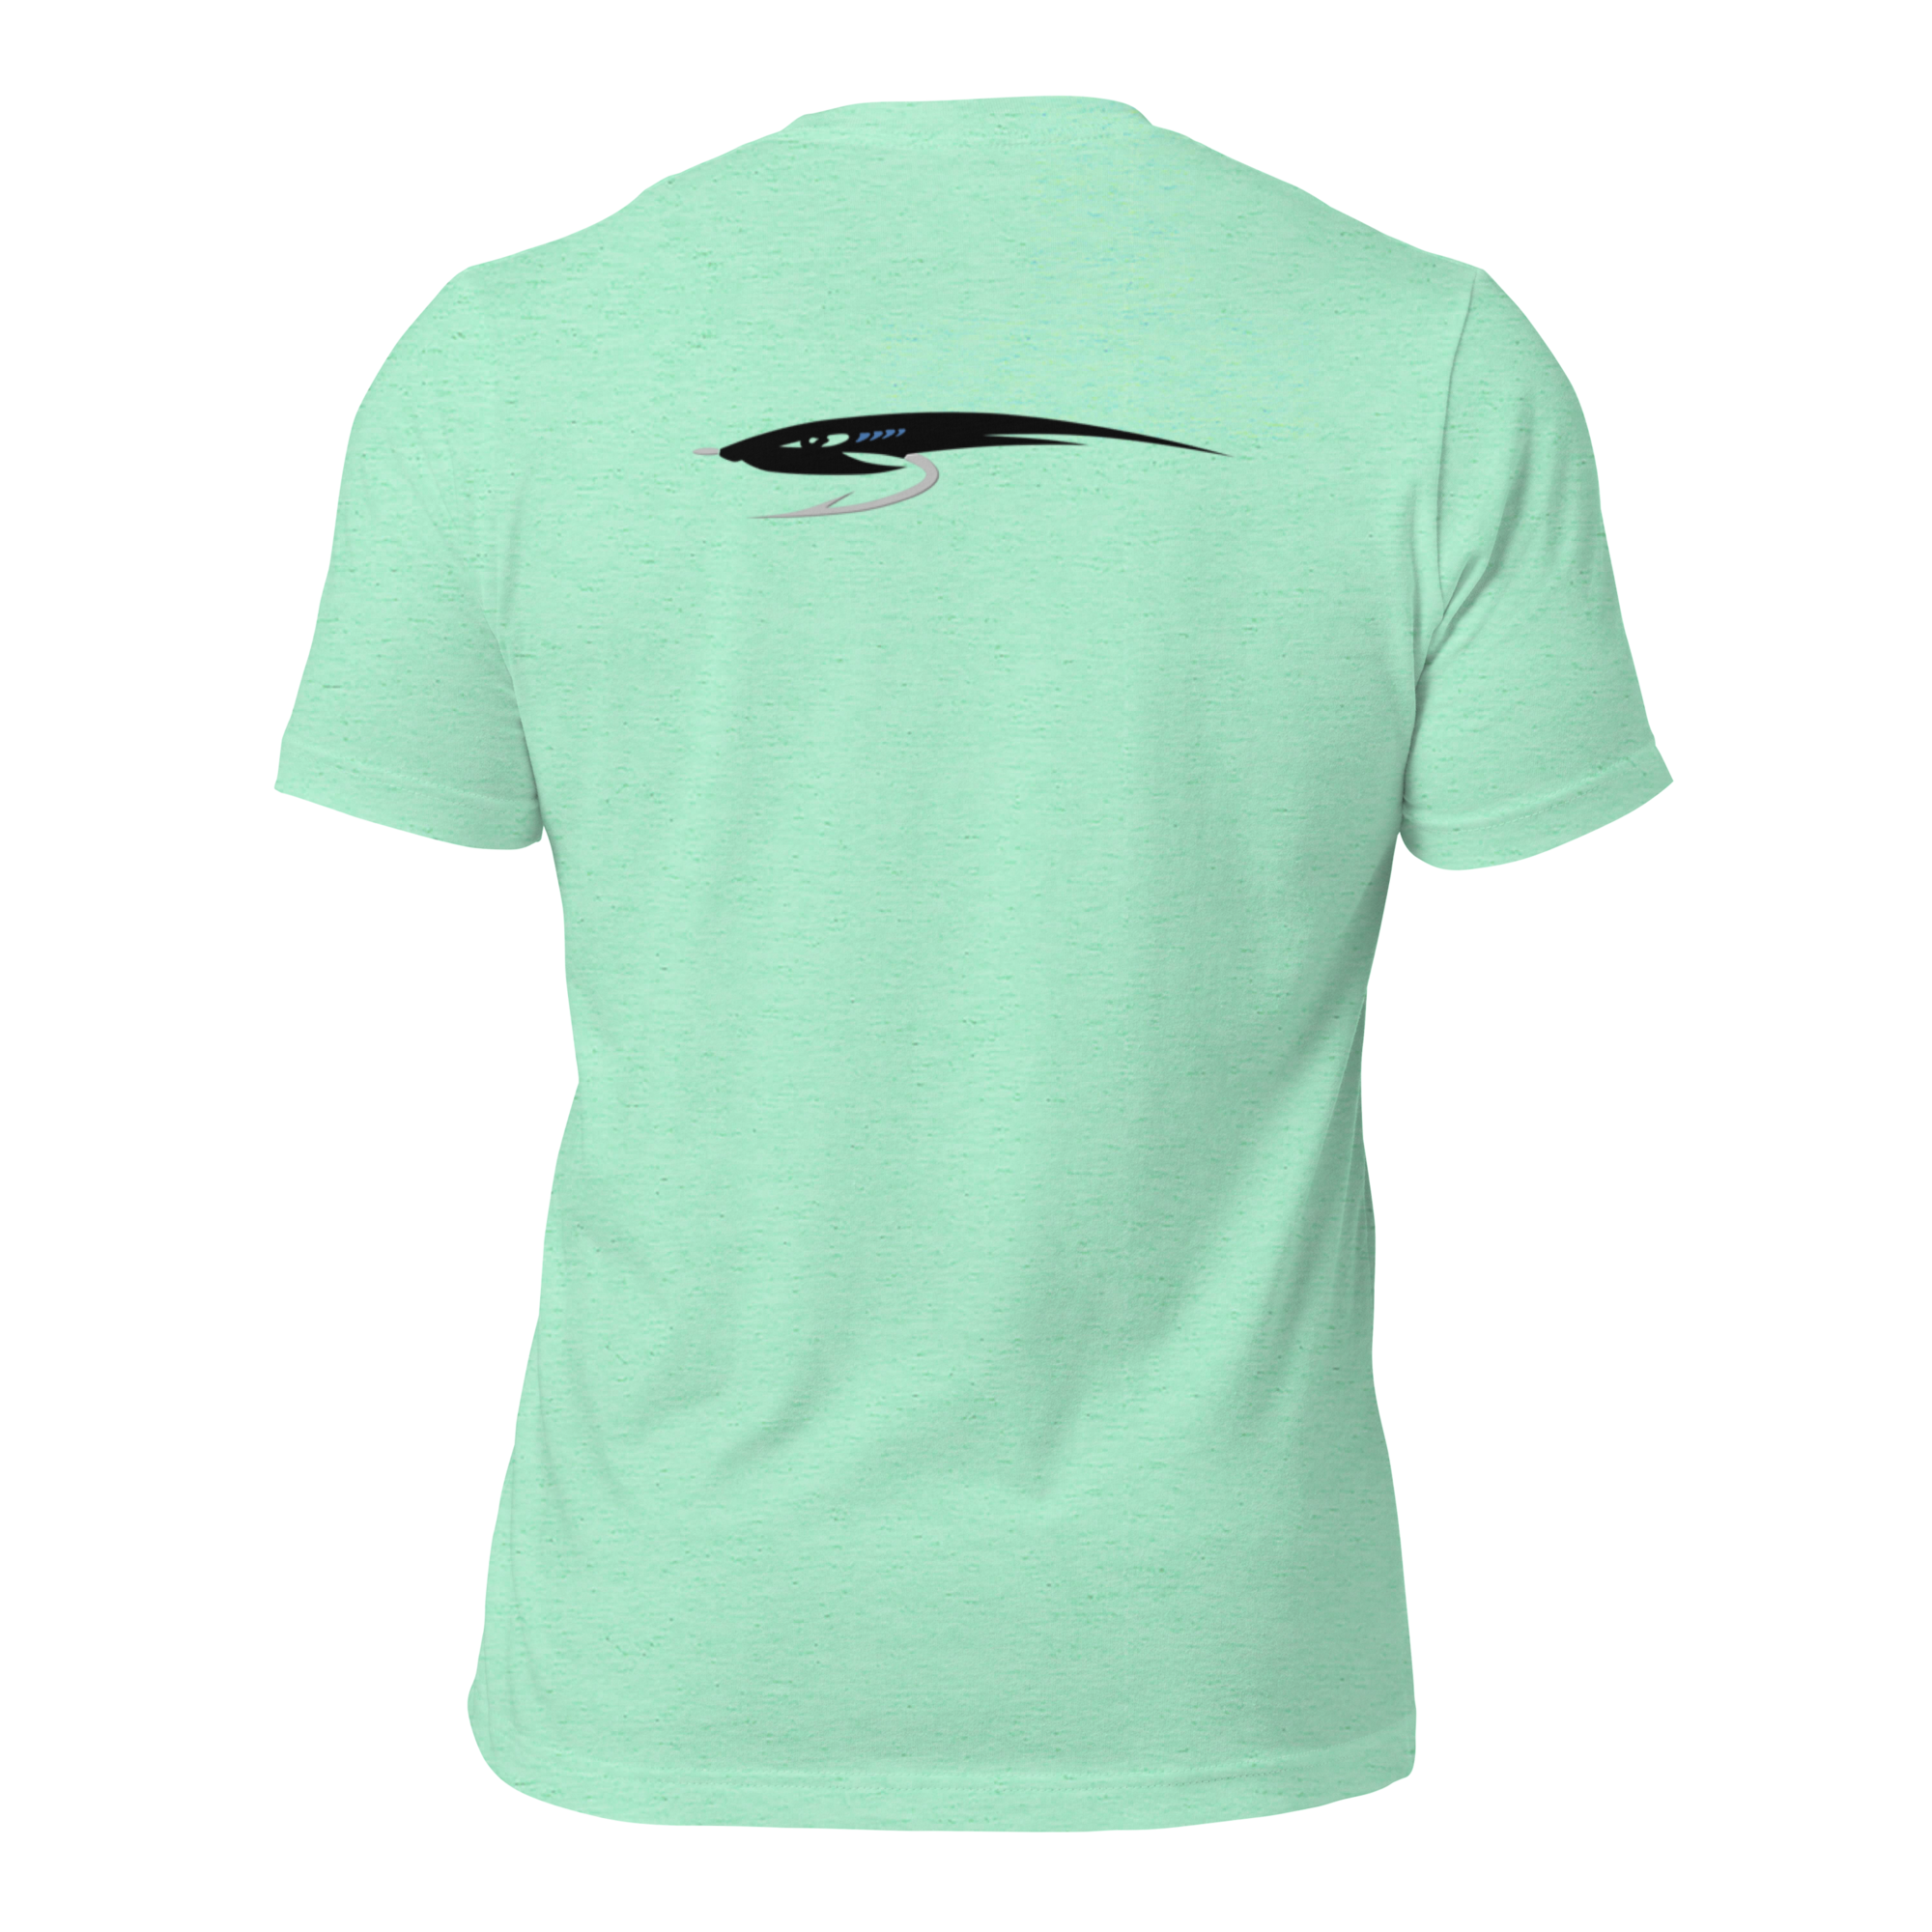 unisex-staple-t-shirt-heather-mint-back-653fc8c07f6a0_1b079401-e032-4374-828e-39c26c6d5771.png